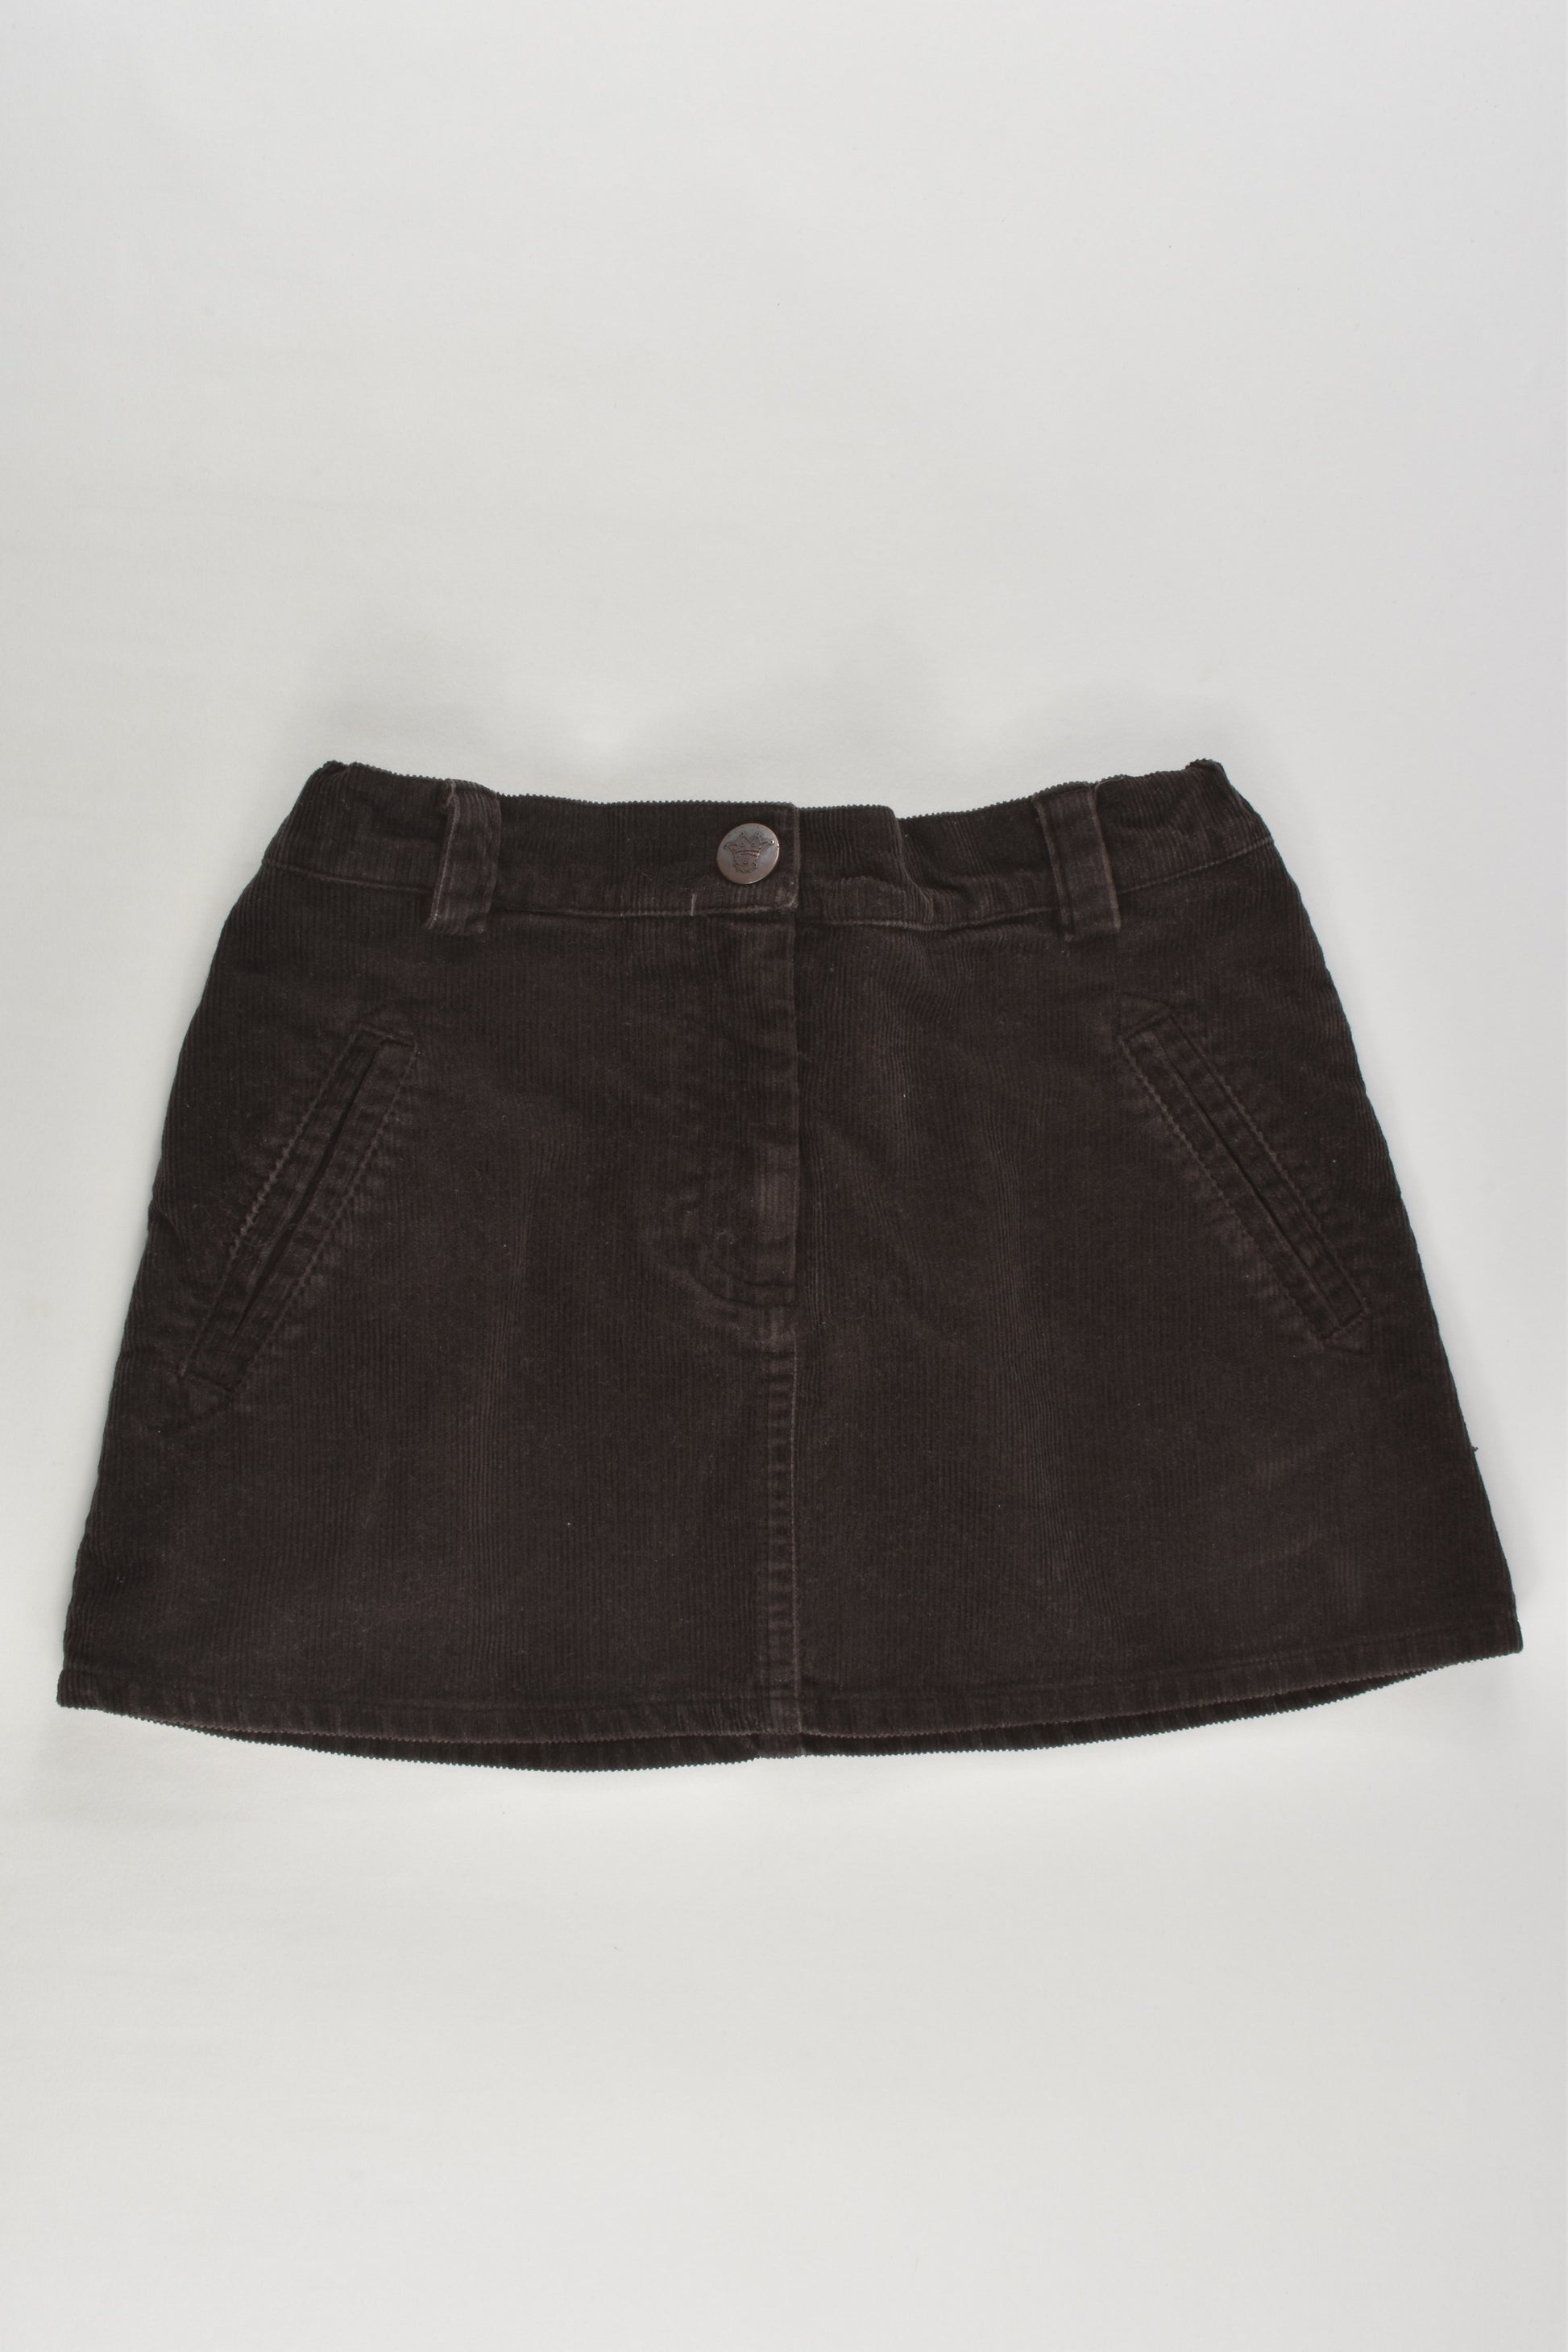 Marie Chantal Size 6-8 Cord Skirt